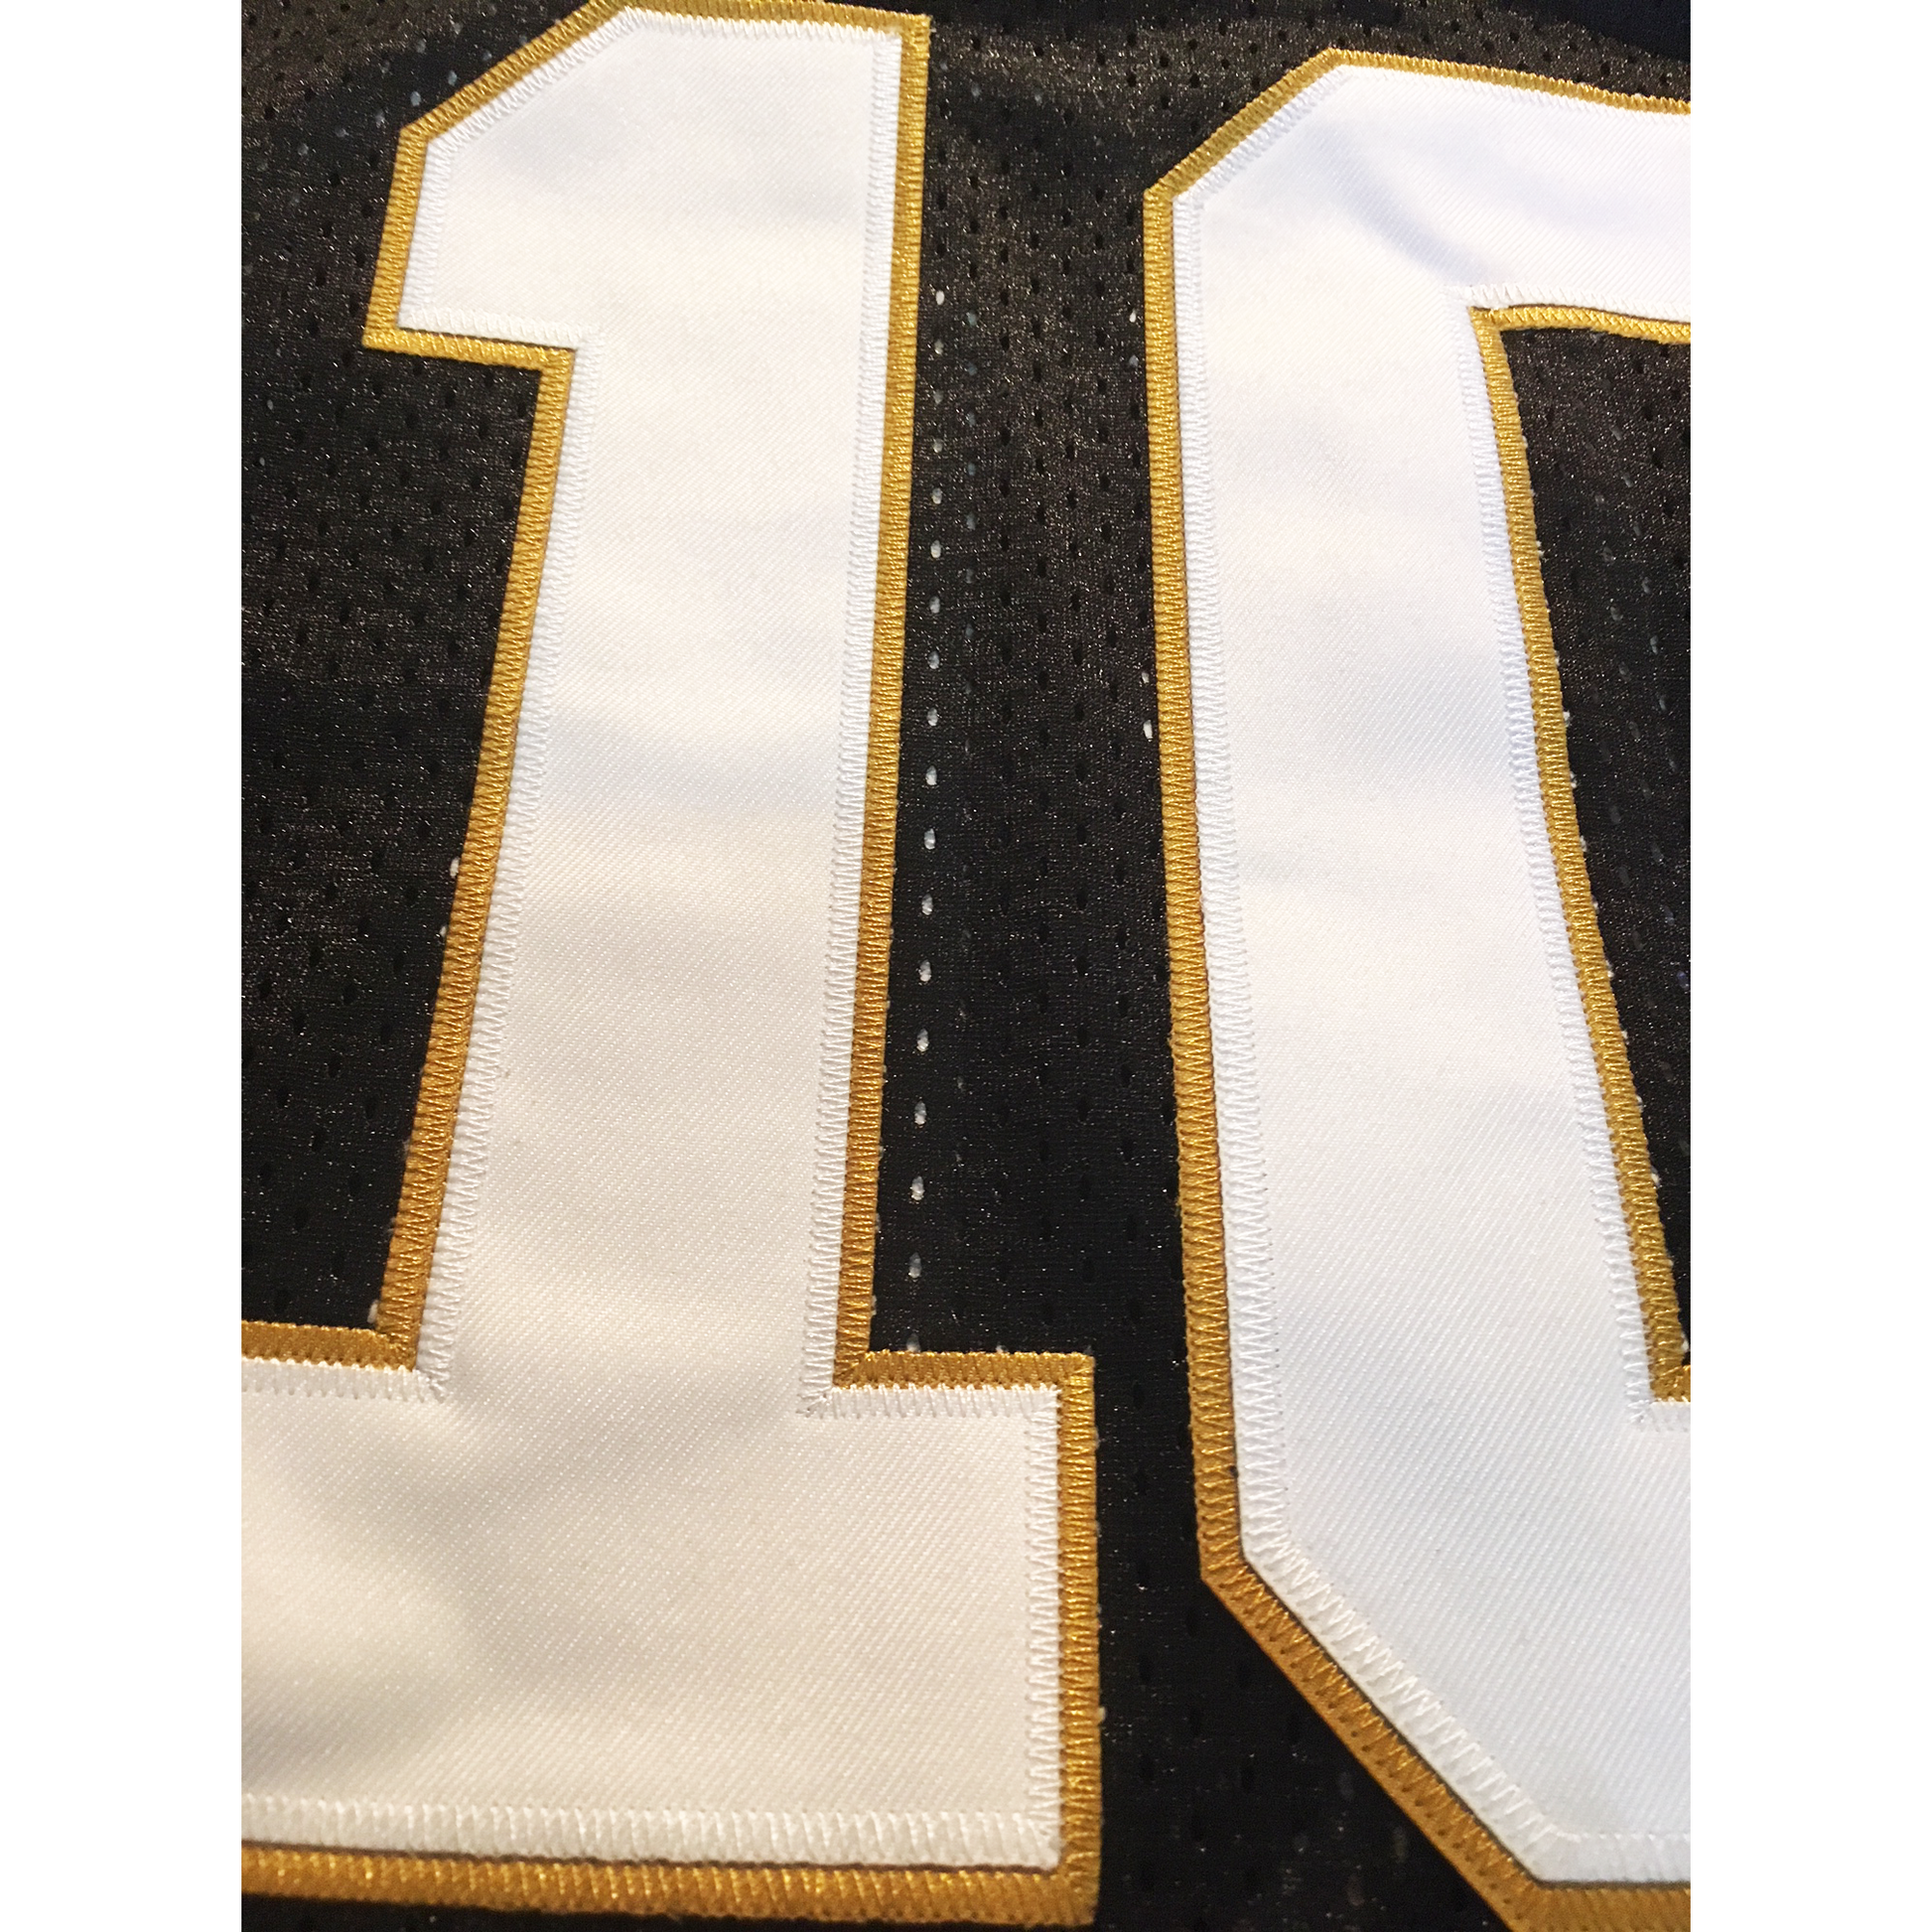 Stadium Youth Hockey Jersey - in Black/Gold/Grey Size Small/Medium